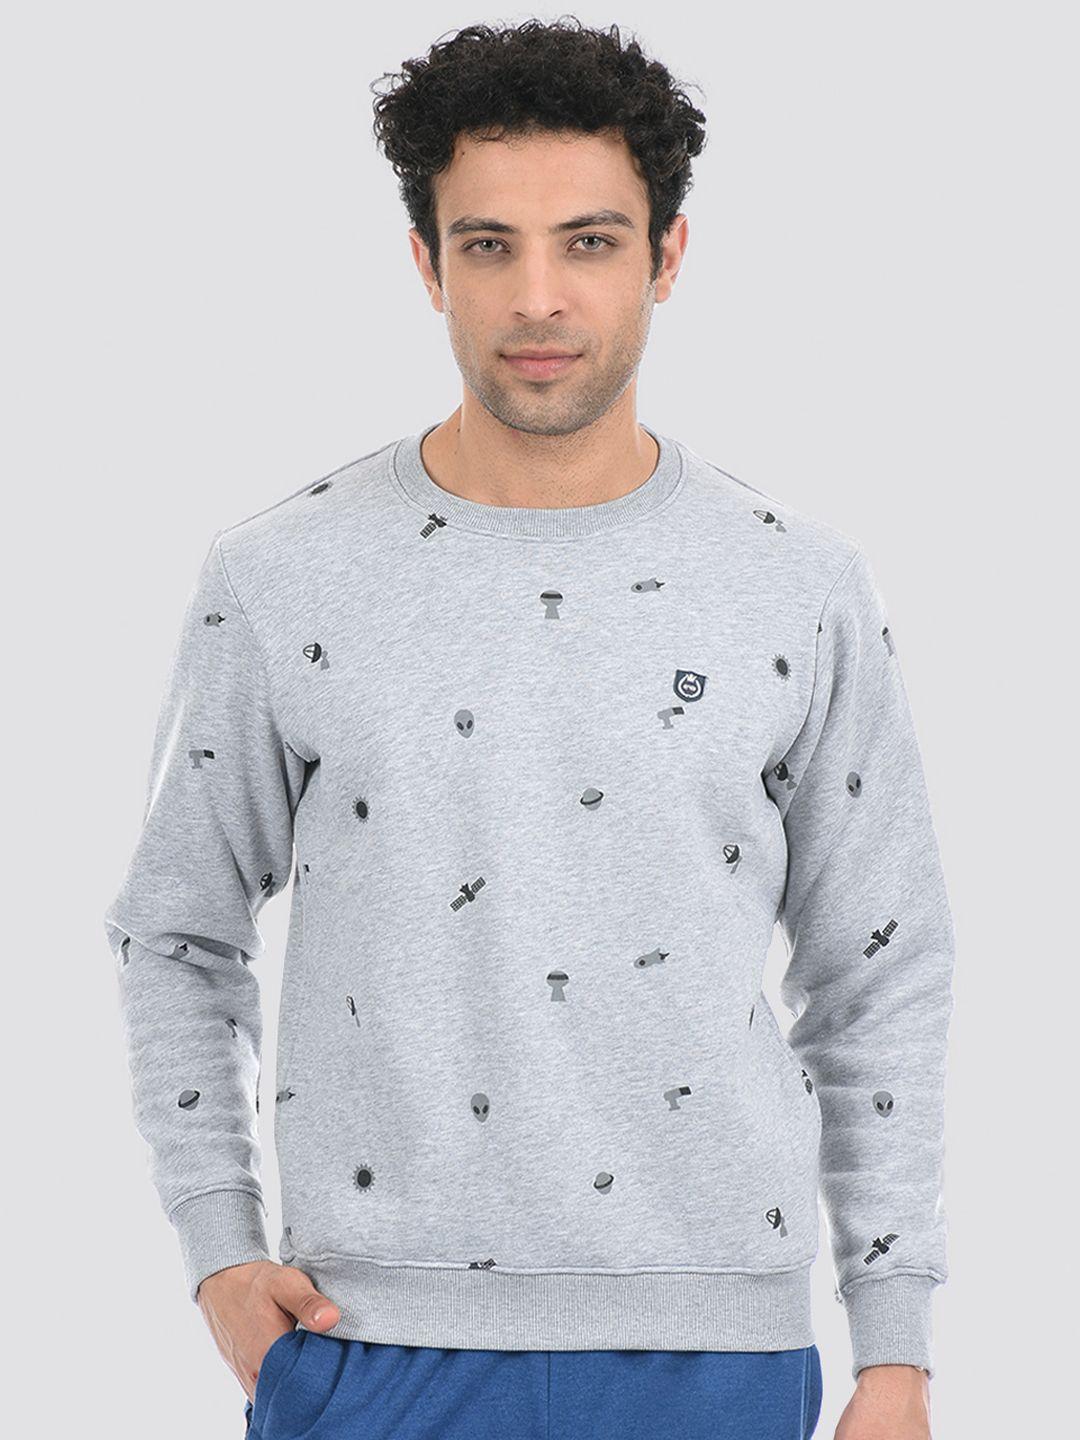 cloak & decker by monte carlo men conversational printed pullover cotton sweatshirt